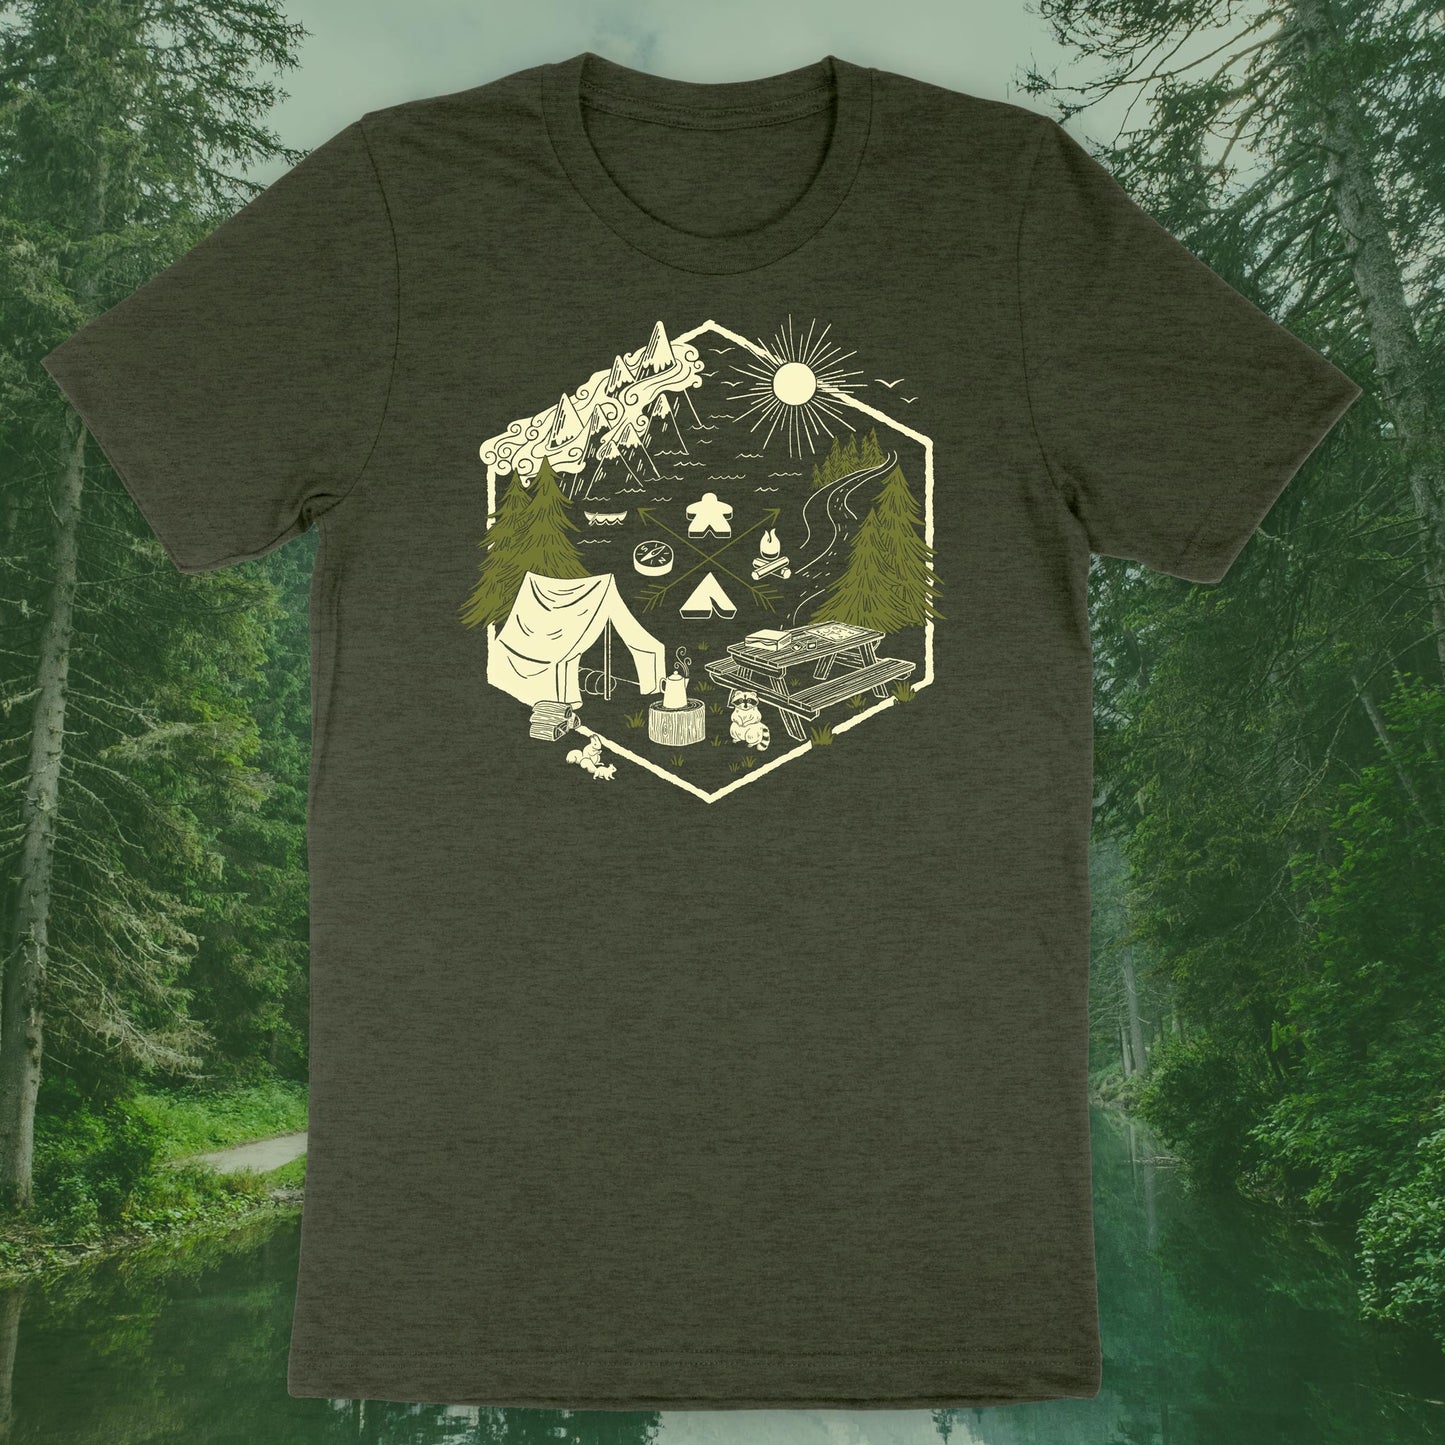 Camping & Board Games - Adult T-Shirt